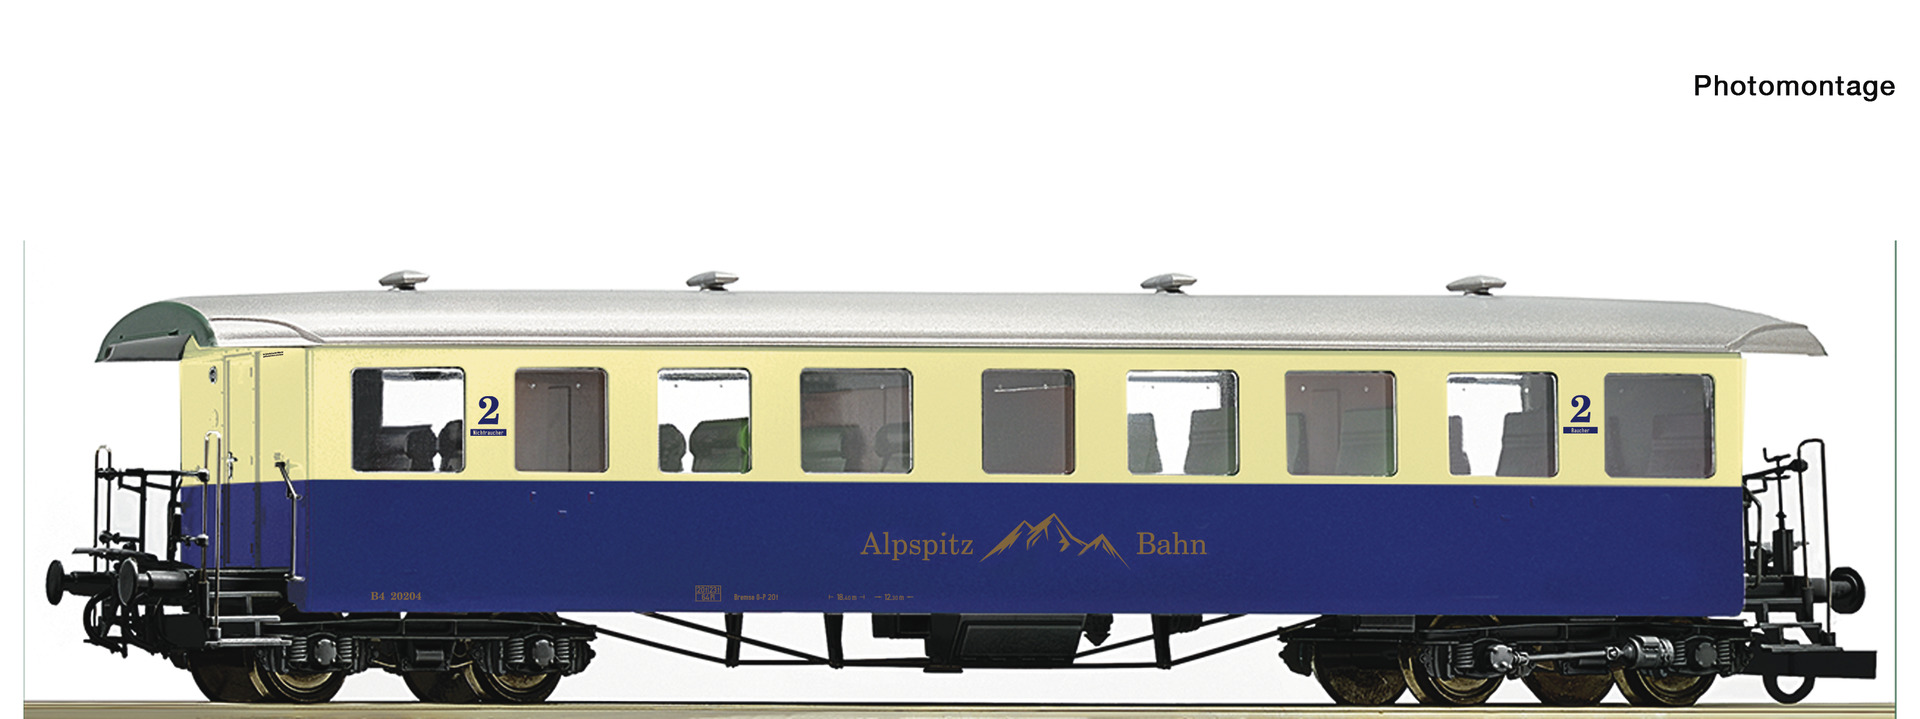 Roco 74506, Alpspitz-Bahn, Zahnradbahn-Personenwagen, 2. Klasse, creme/blau